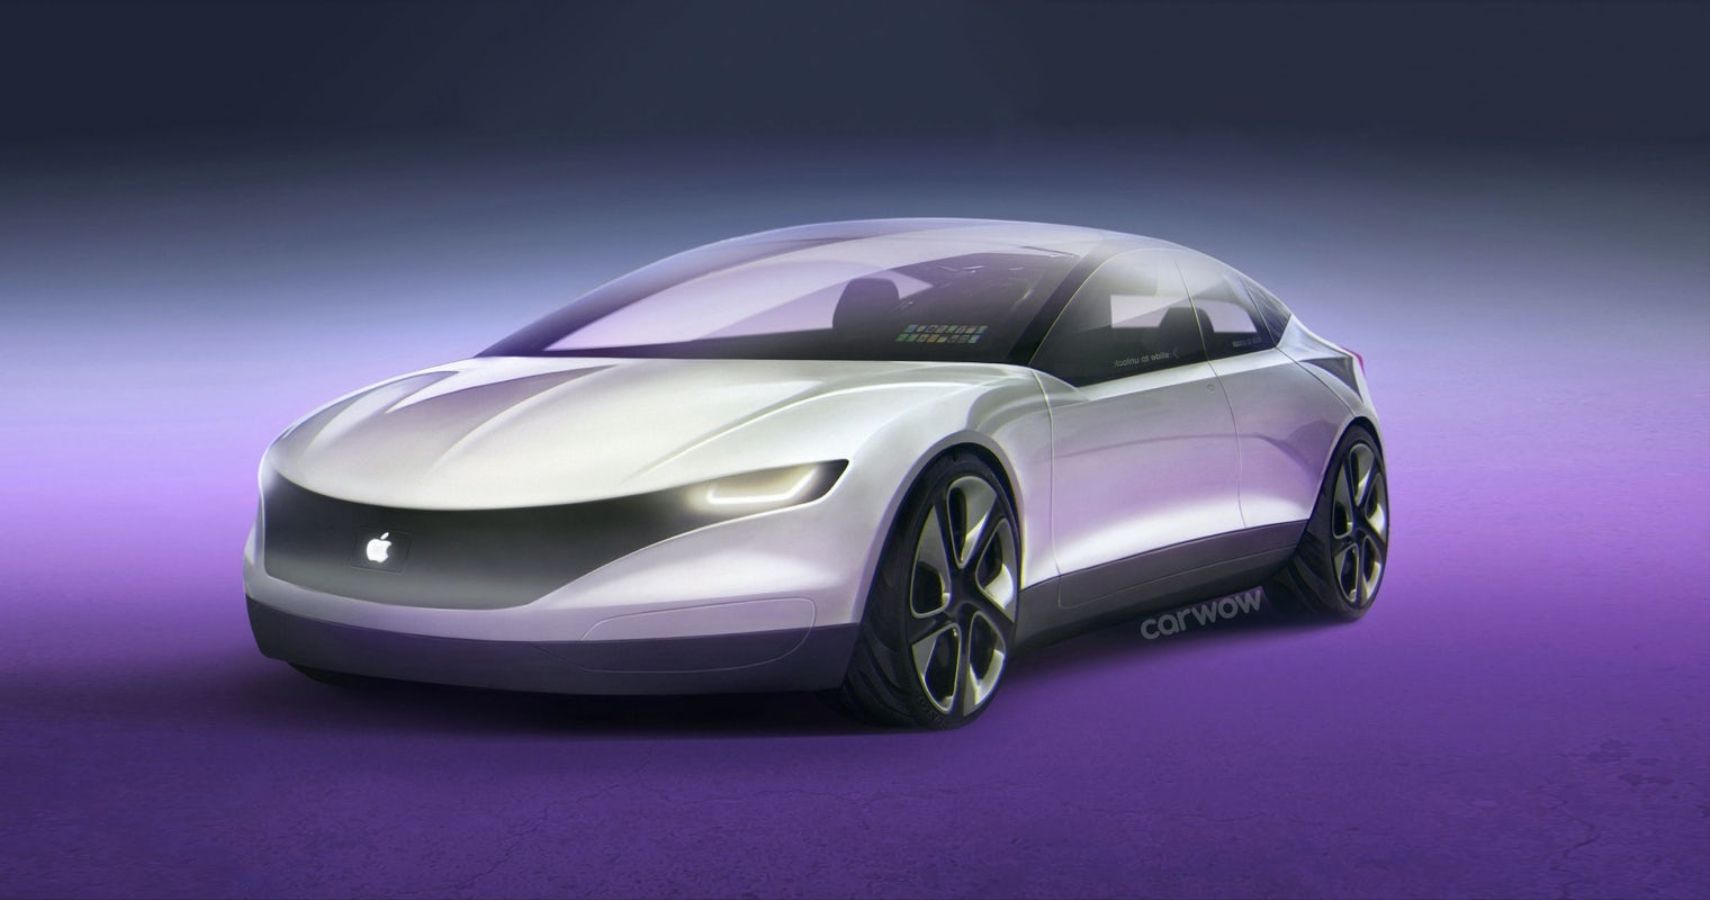 Why Apple's Car Tech Will Never Surpass Tesla's